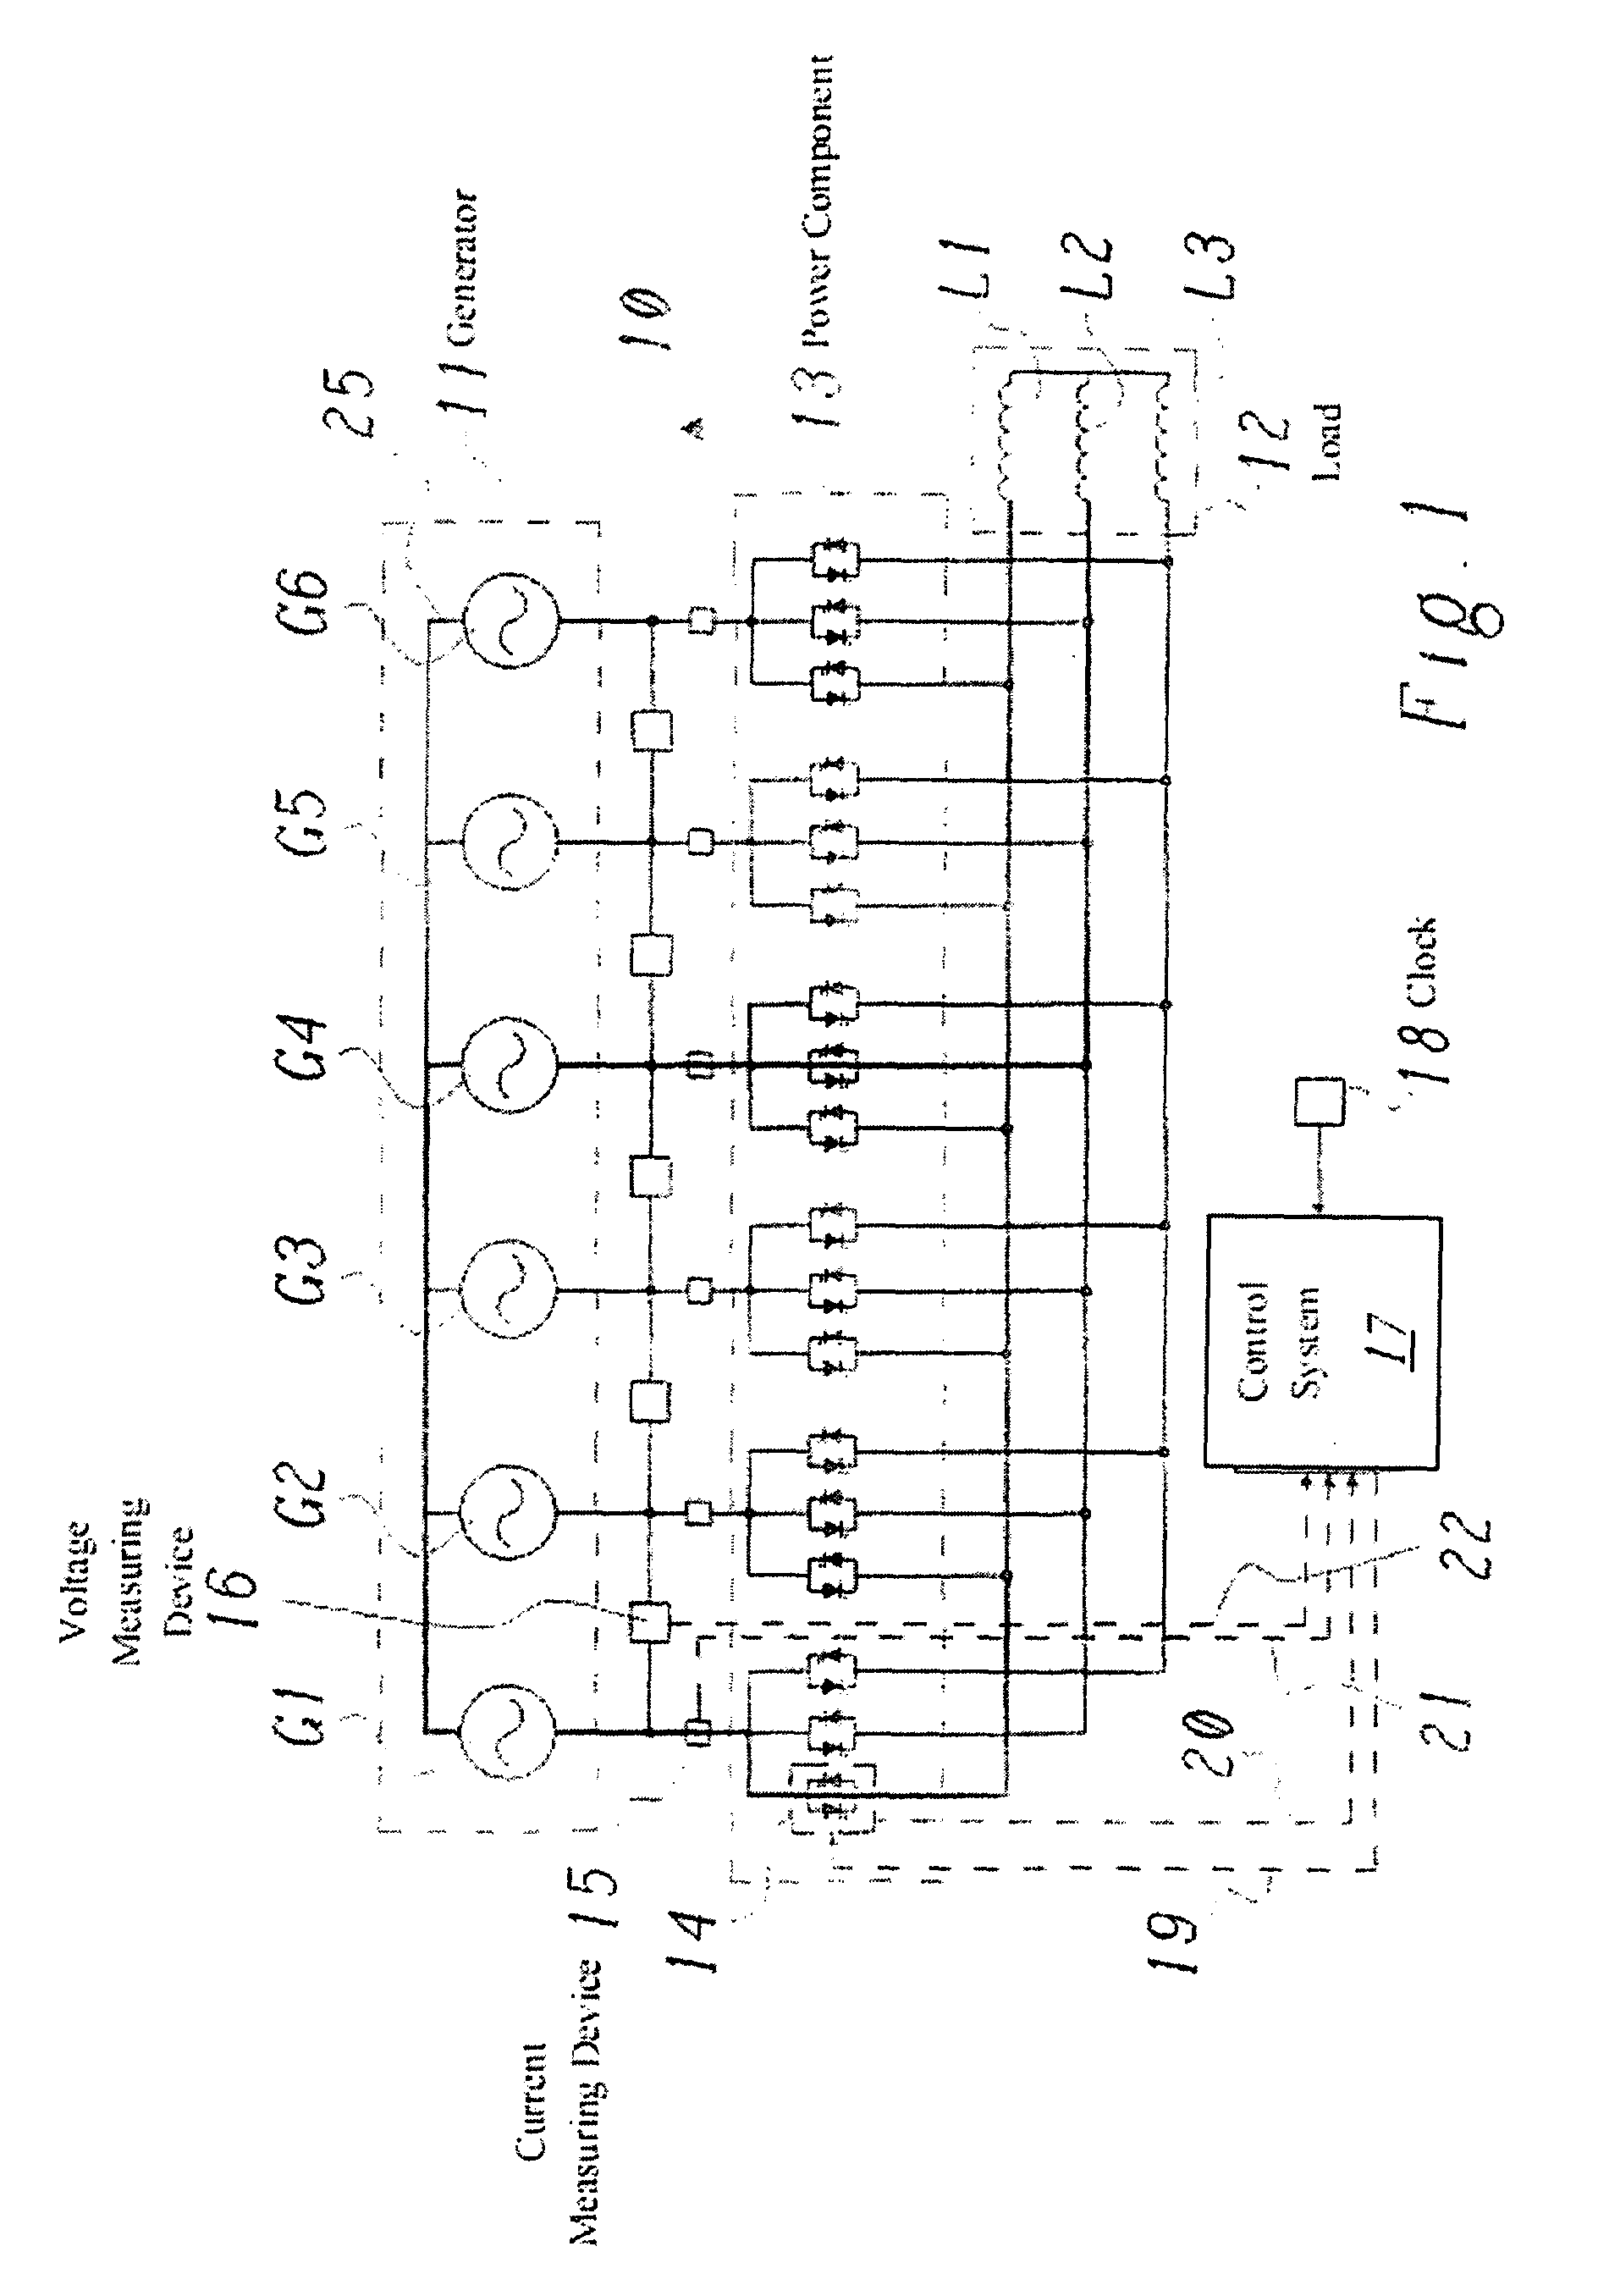 Bi-directional matrix converter with reverse start-up